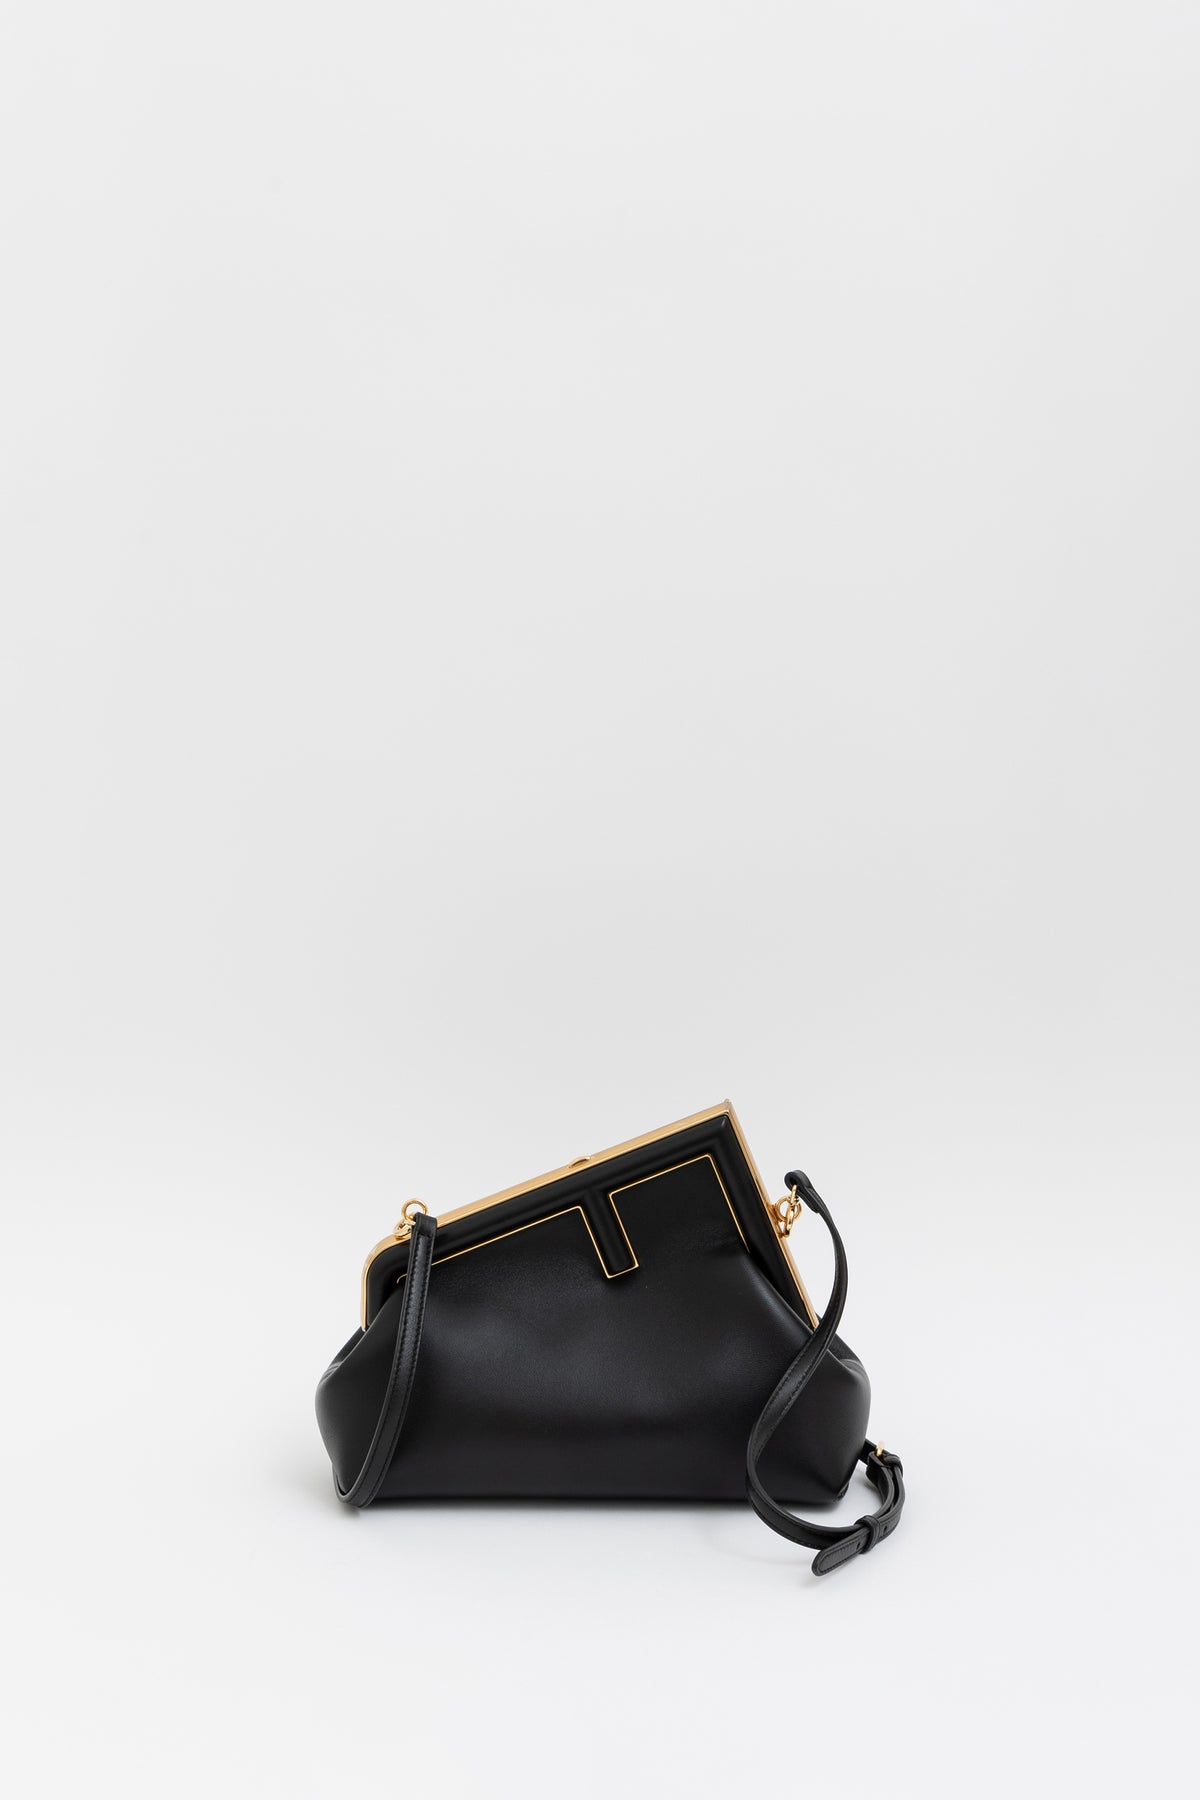 Fendi Black Leather Small Fendi First Bag